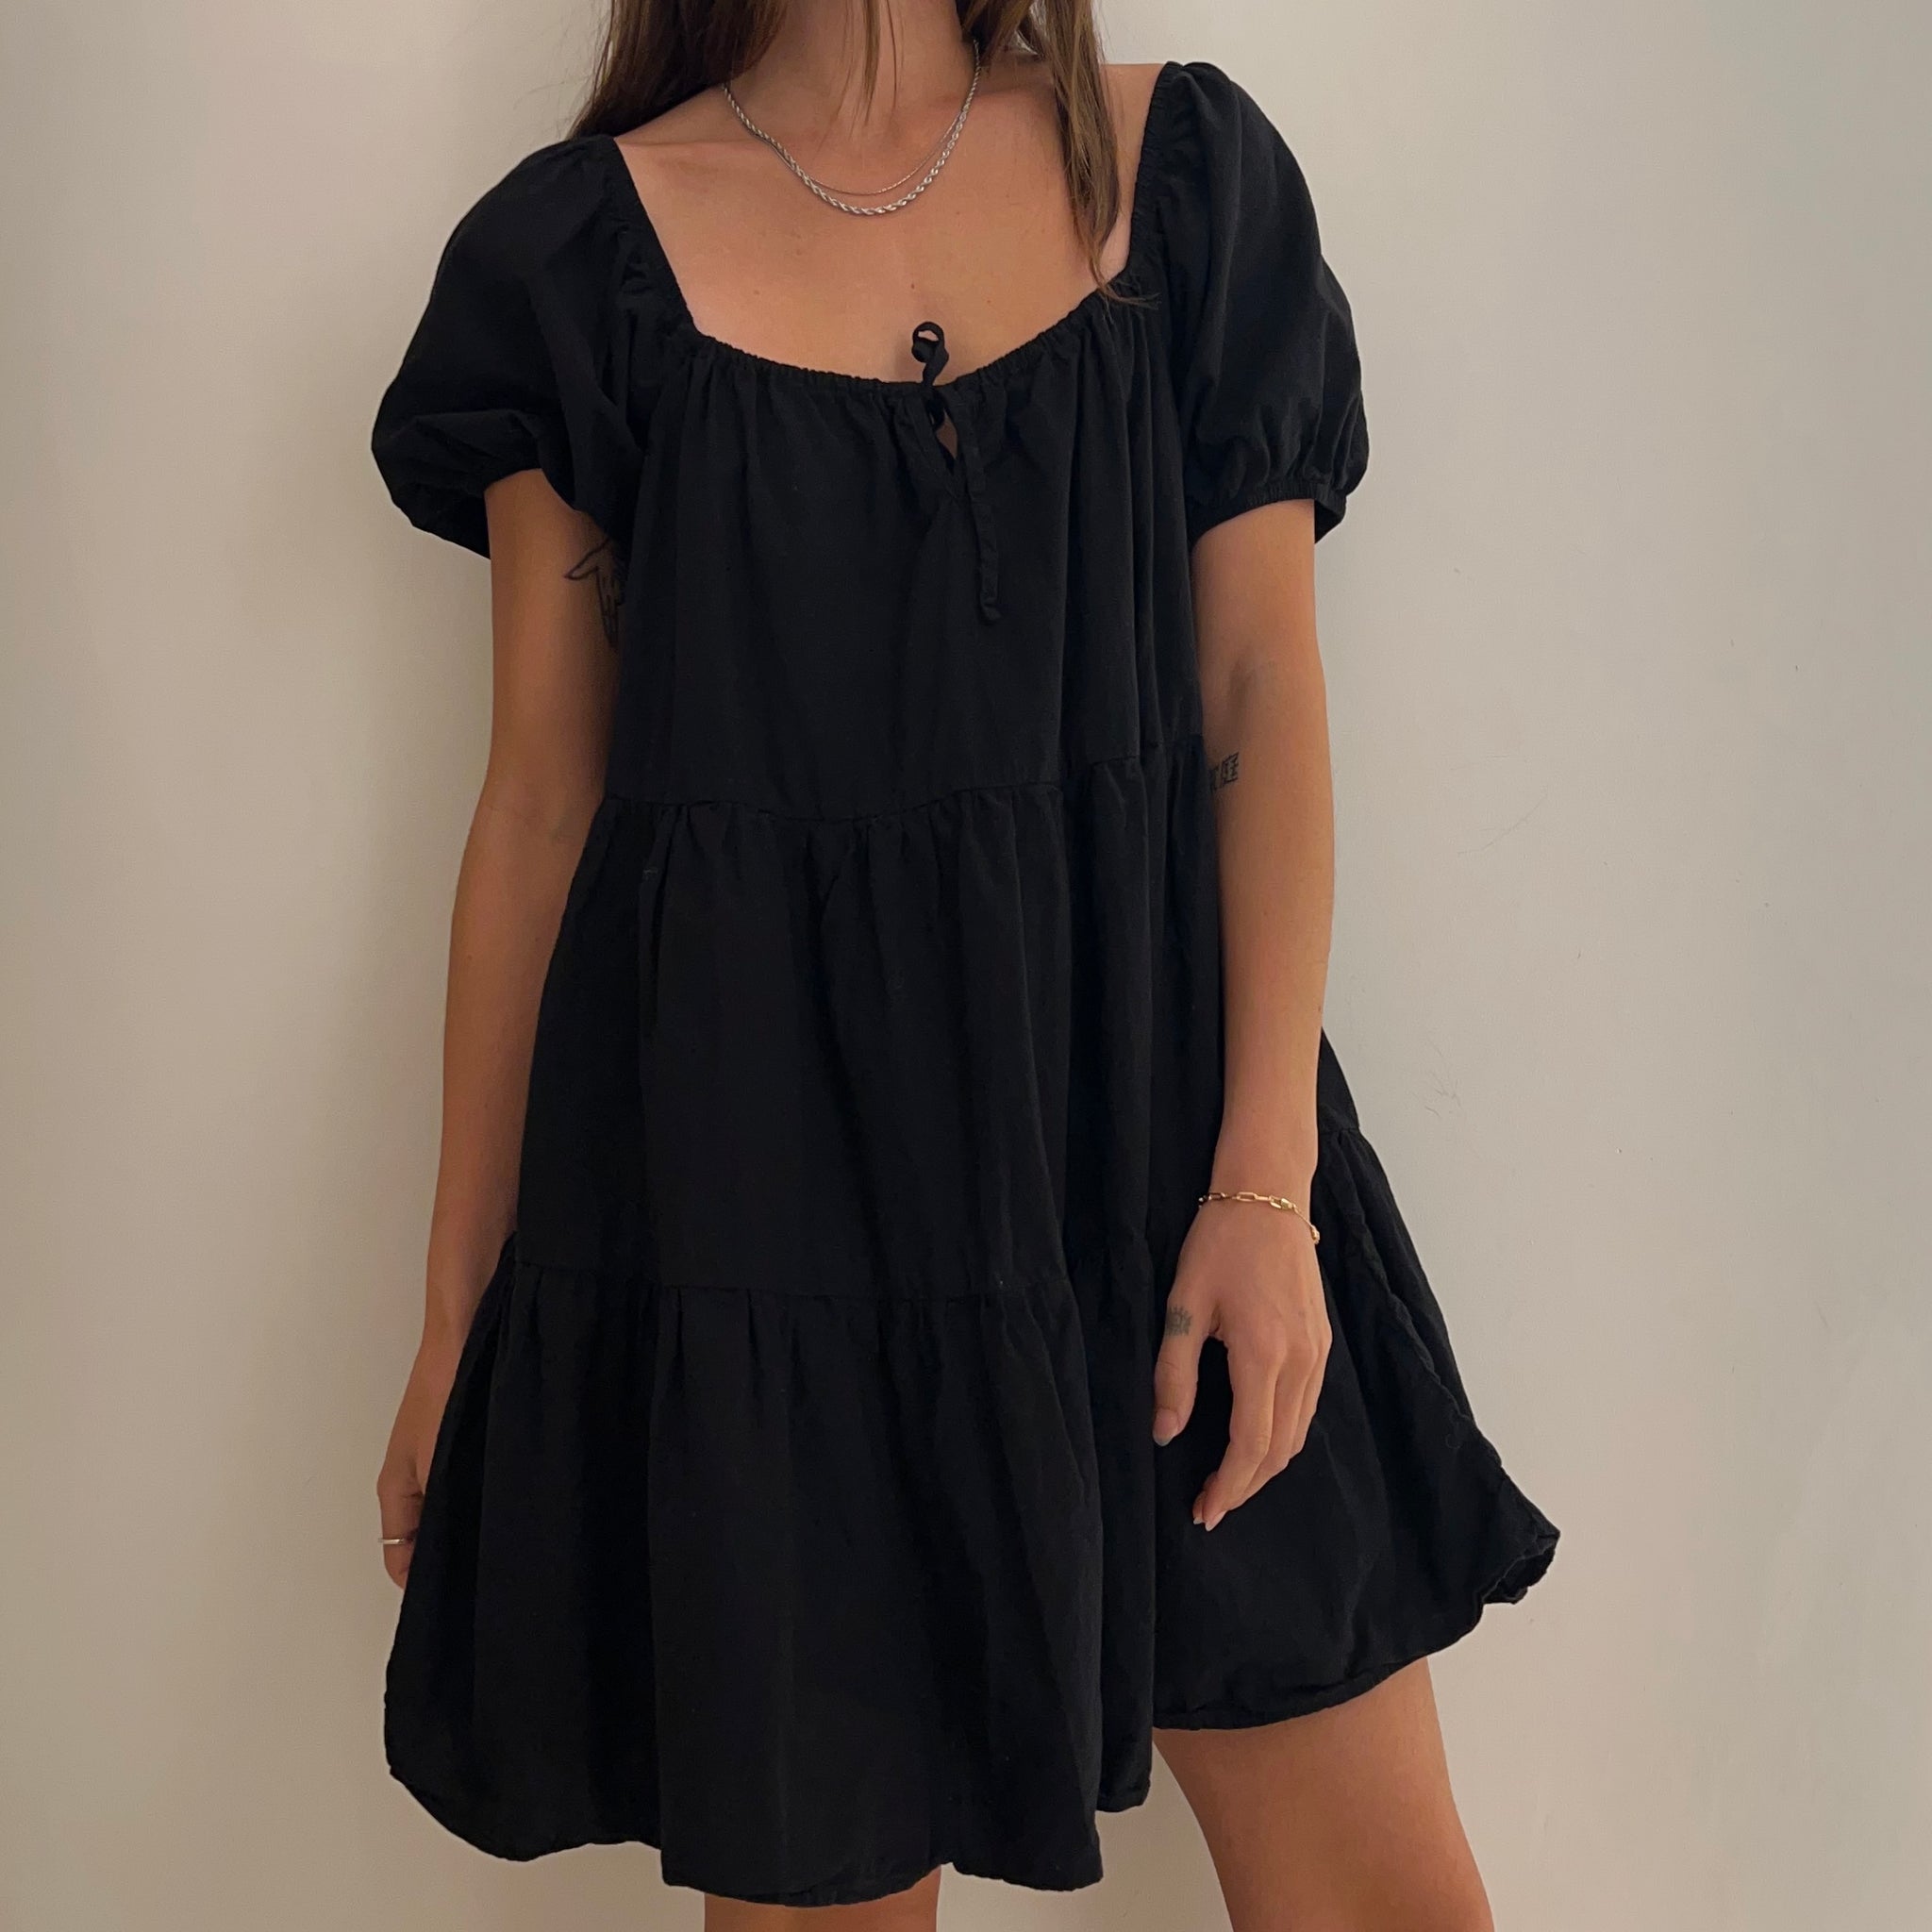 Lacausa Black Mini Dress